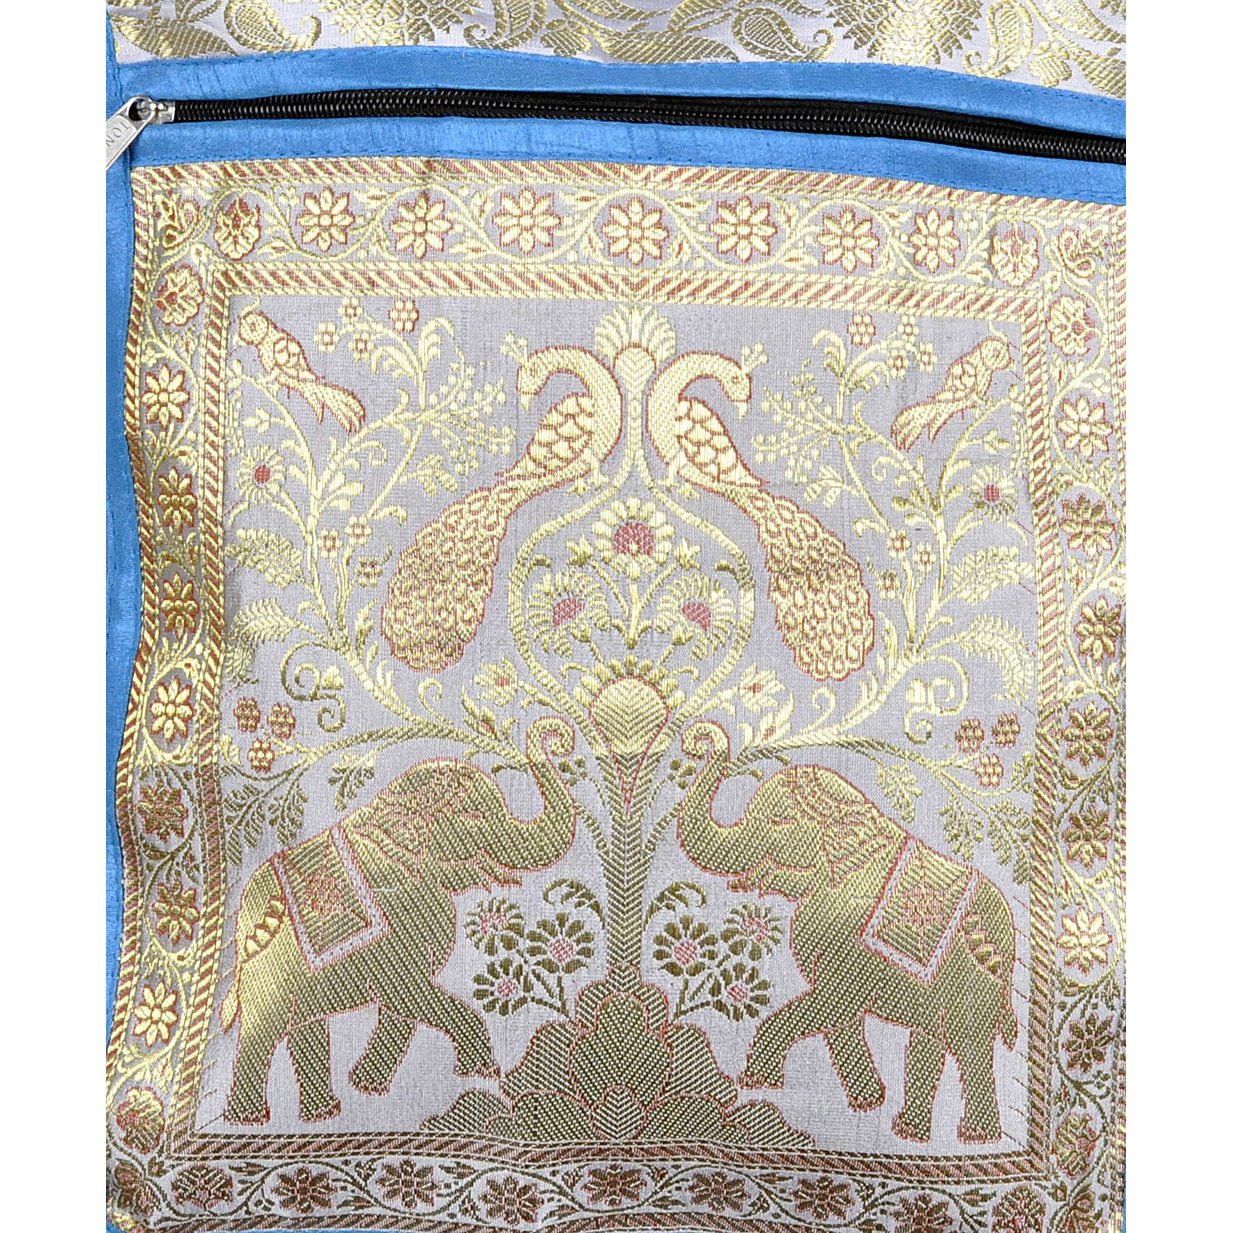 Silk Indian Shoulder Sling Bag Silk Brocade Animal Cross Body Bag Women's Gift